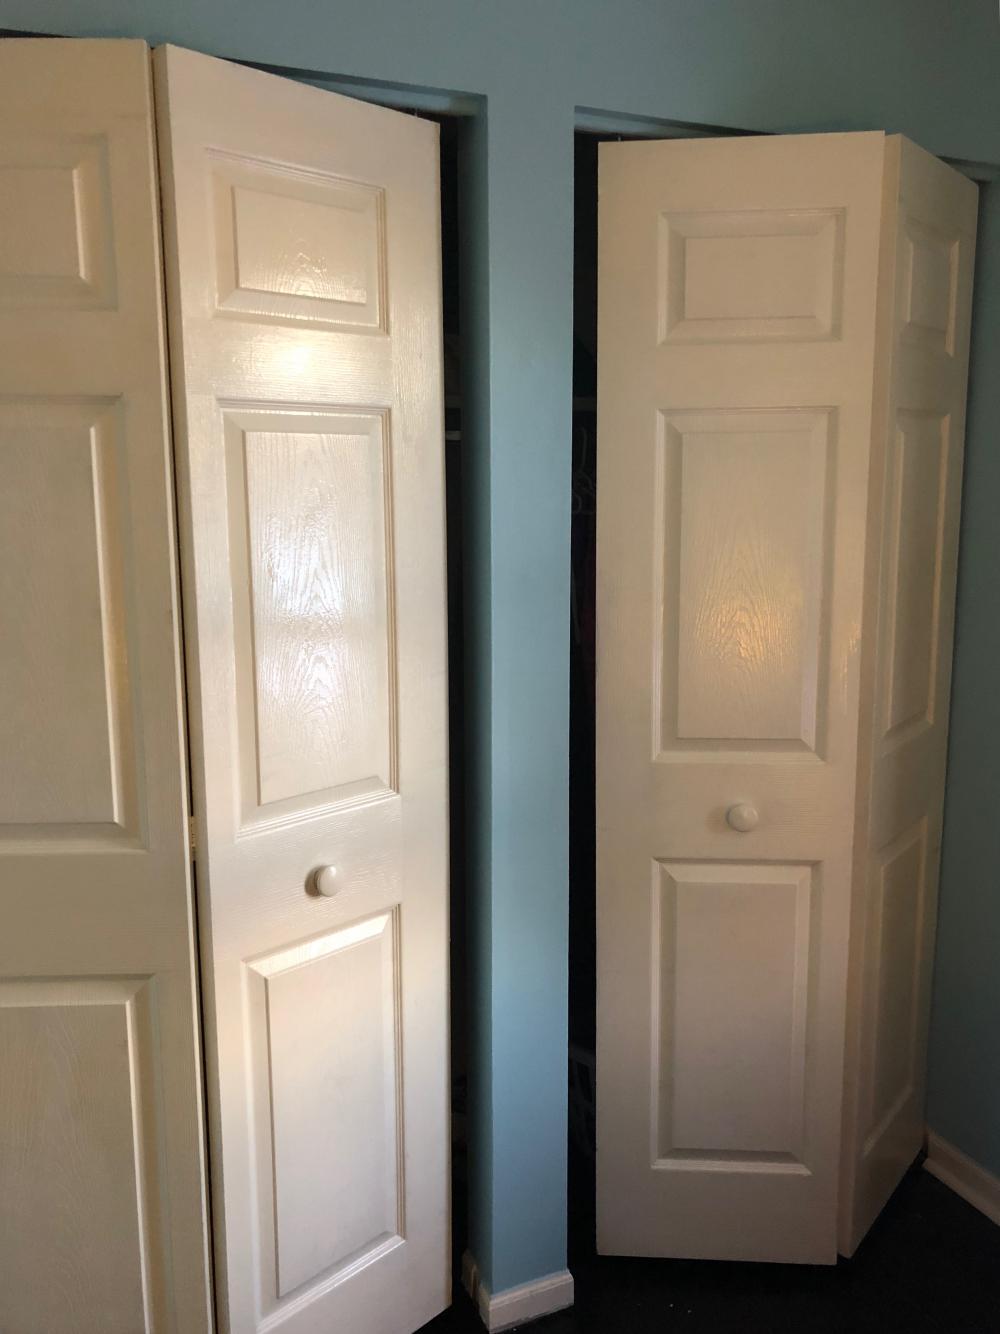 Closet doors repainted